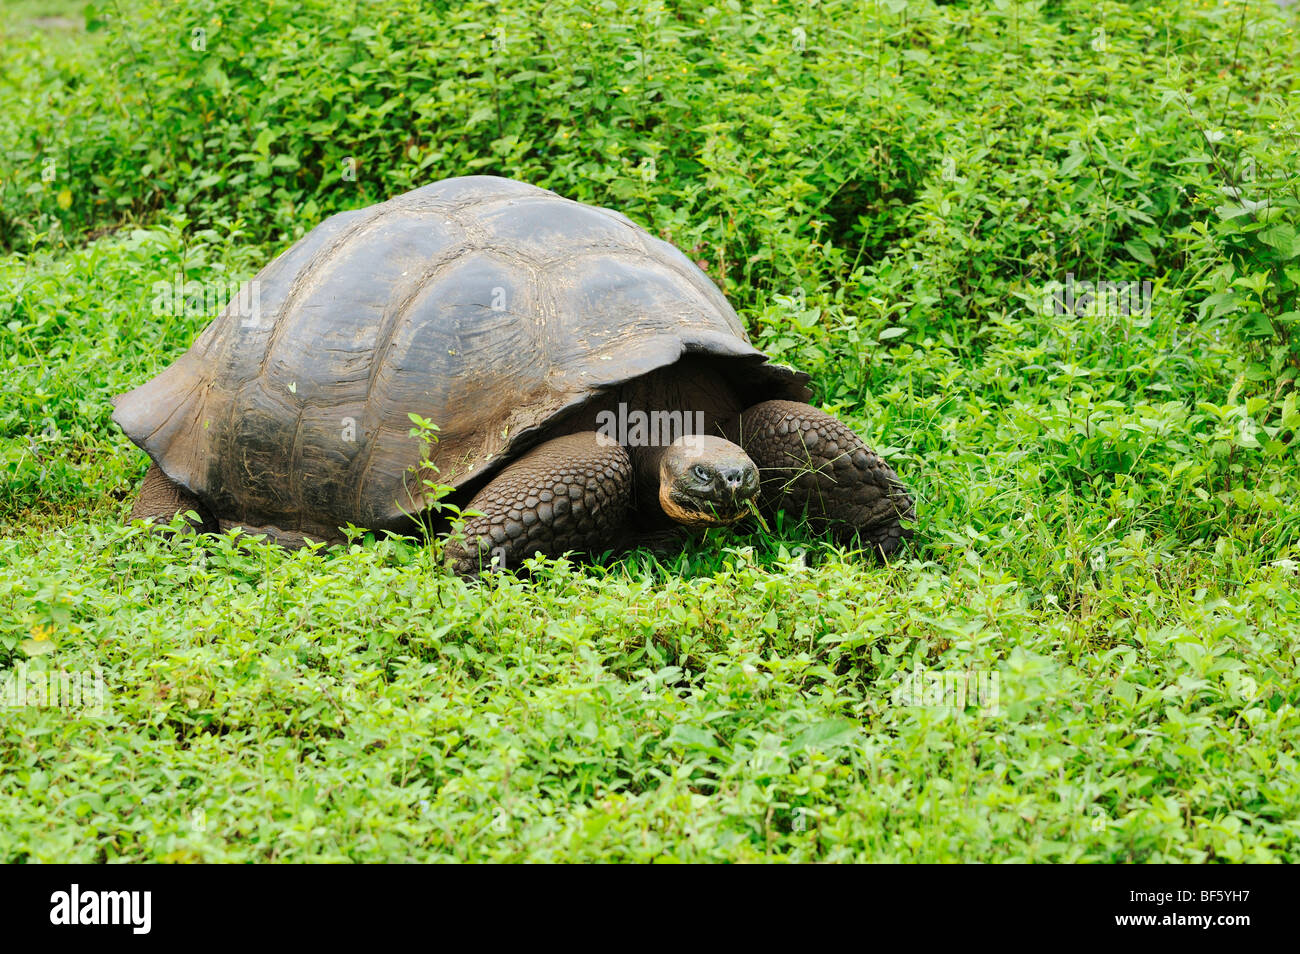 Le Galapagos La tartaruga gigante (Geochelone elephantopus), Adulto mangiare, Isole Galapagos, Ecuador, Sud America Foto Stock